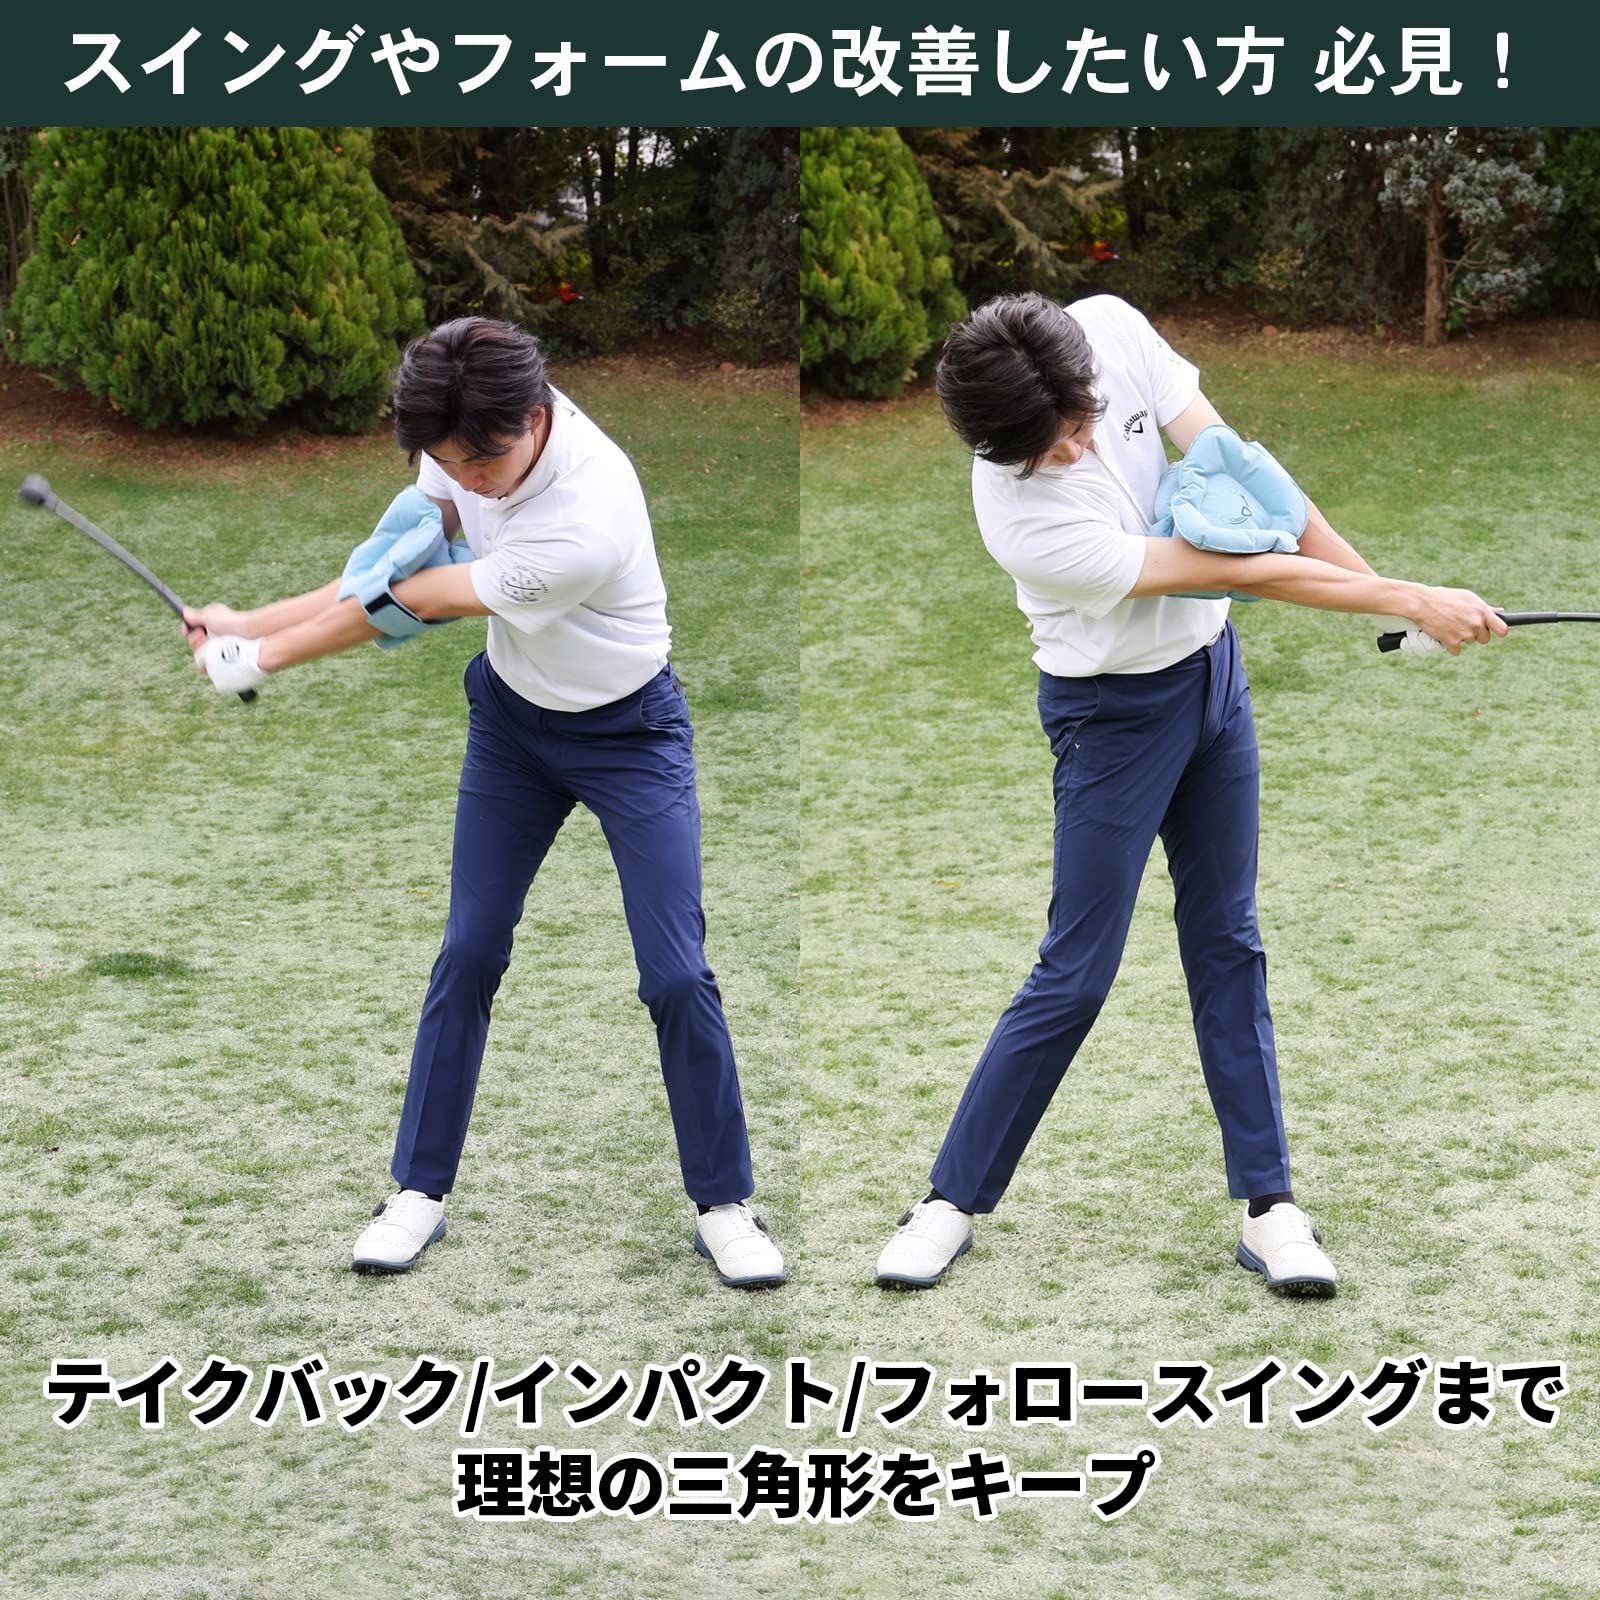 Tabata(タバタ) ゴルフ 素振り トレーニング 練習器具 スイング練習機